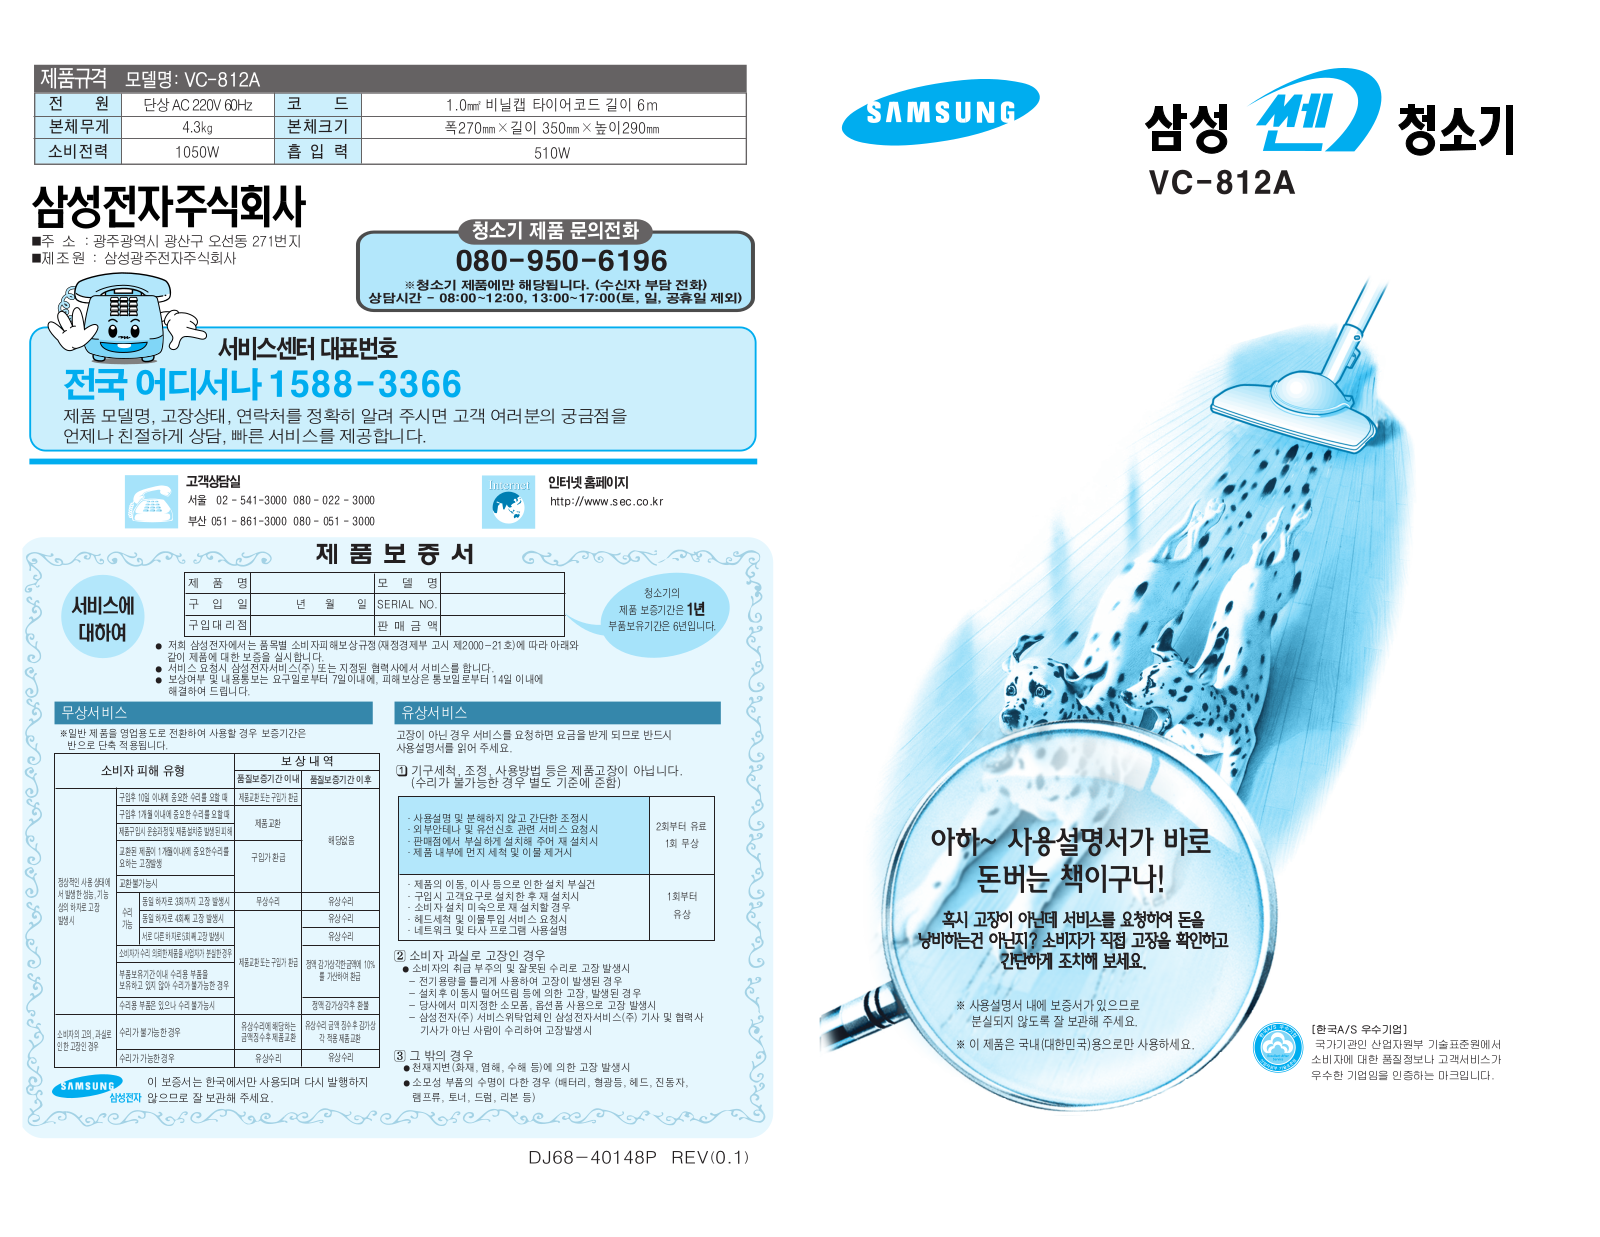 Samsung VC-812A User Manual